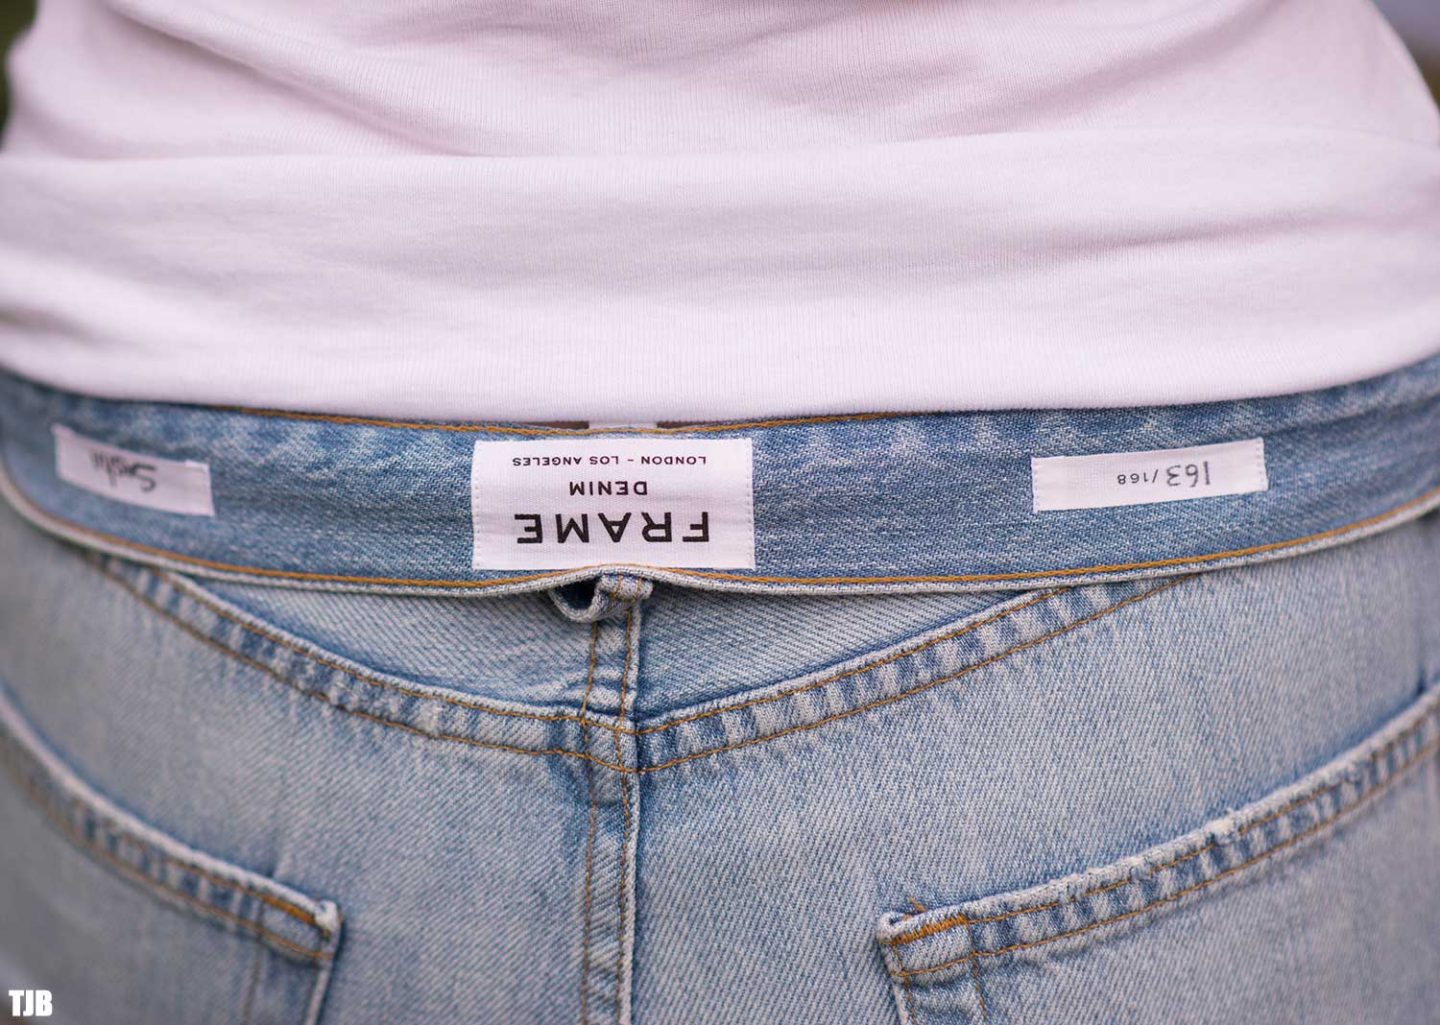 FRAME Sasha P Le Original Jeans in Bushwick Review – THE JEANS BLOG